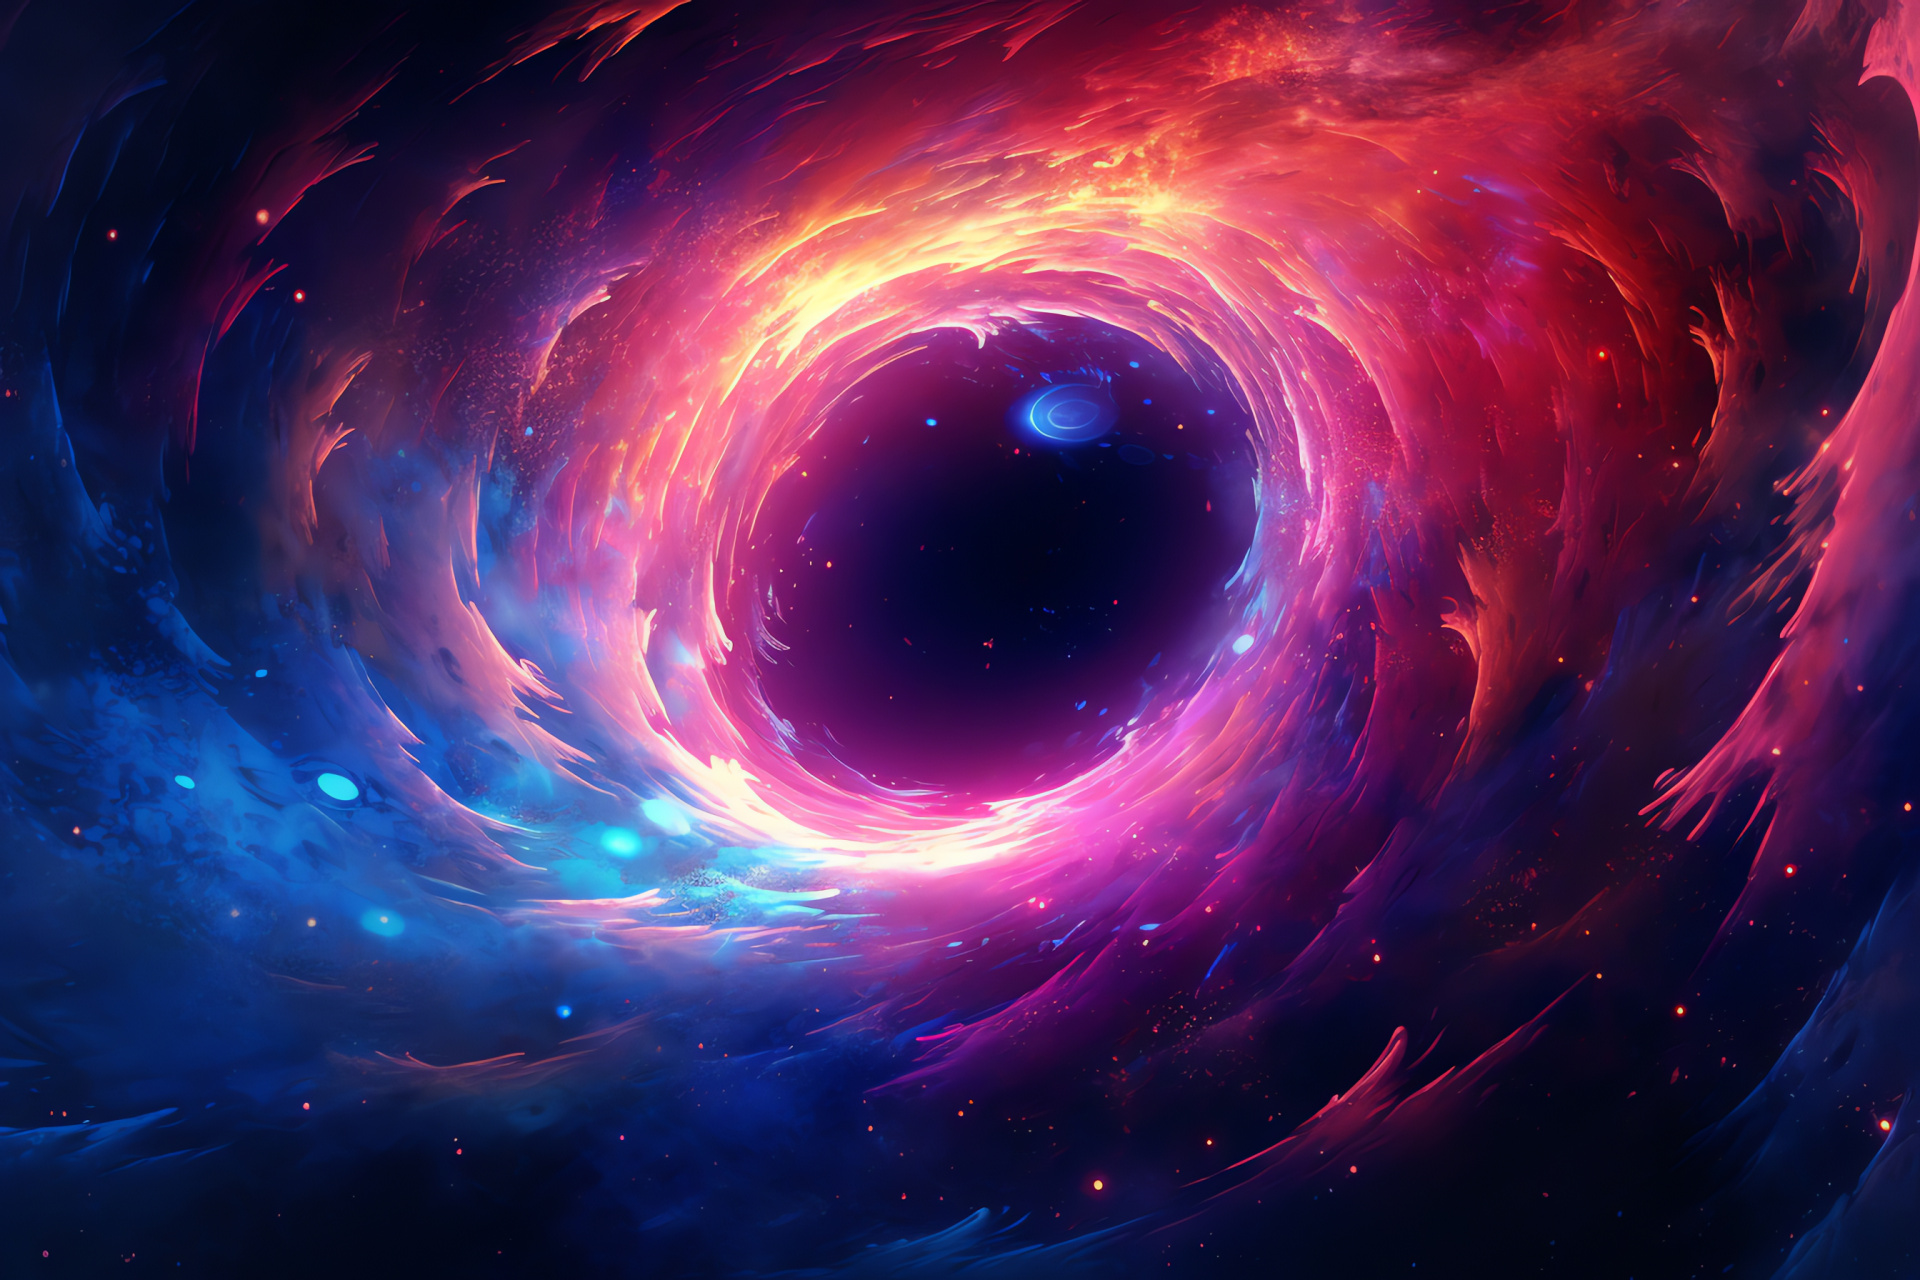 Stellar Nexus, Spectacle of cosmos, Swirling wormhole theory, Galactic phenomenon, Universe secrets, HD Desktop Image